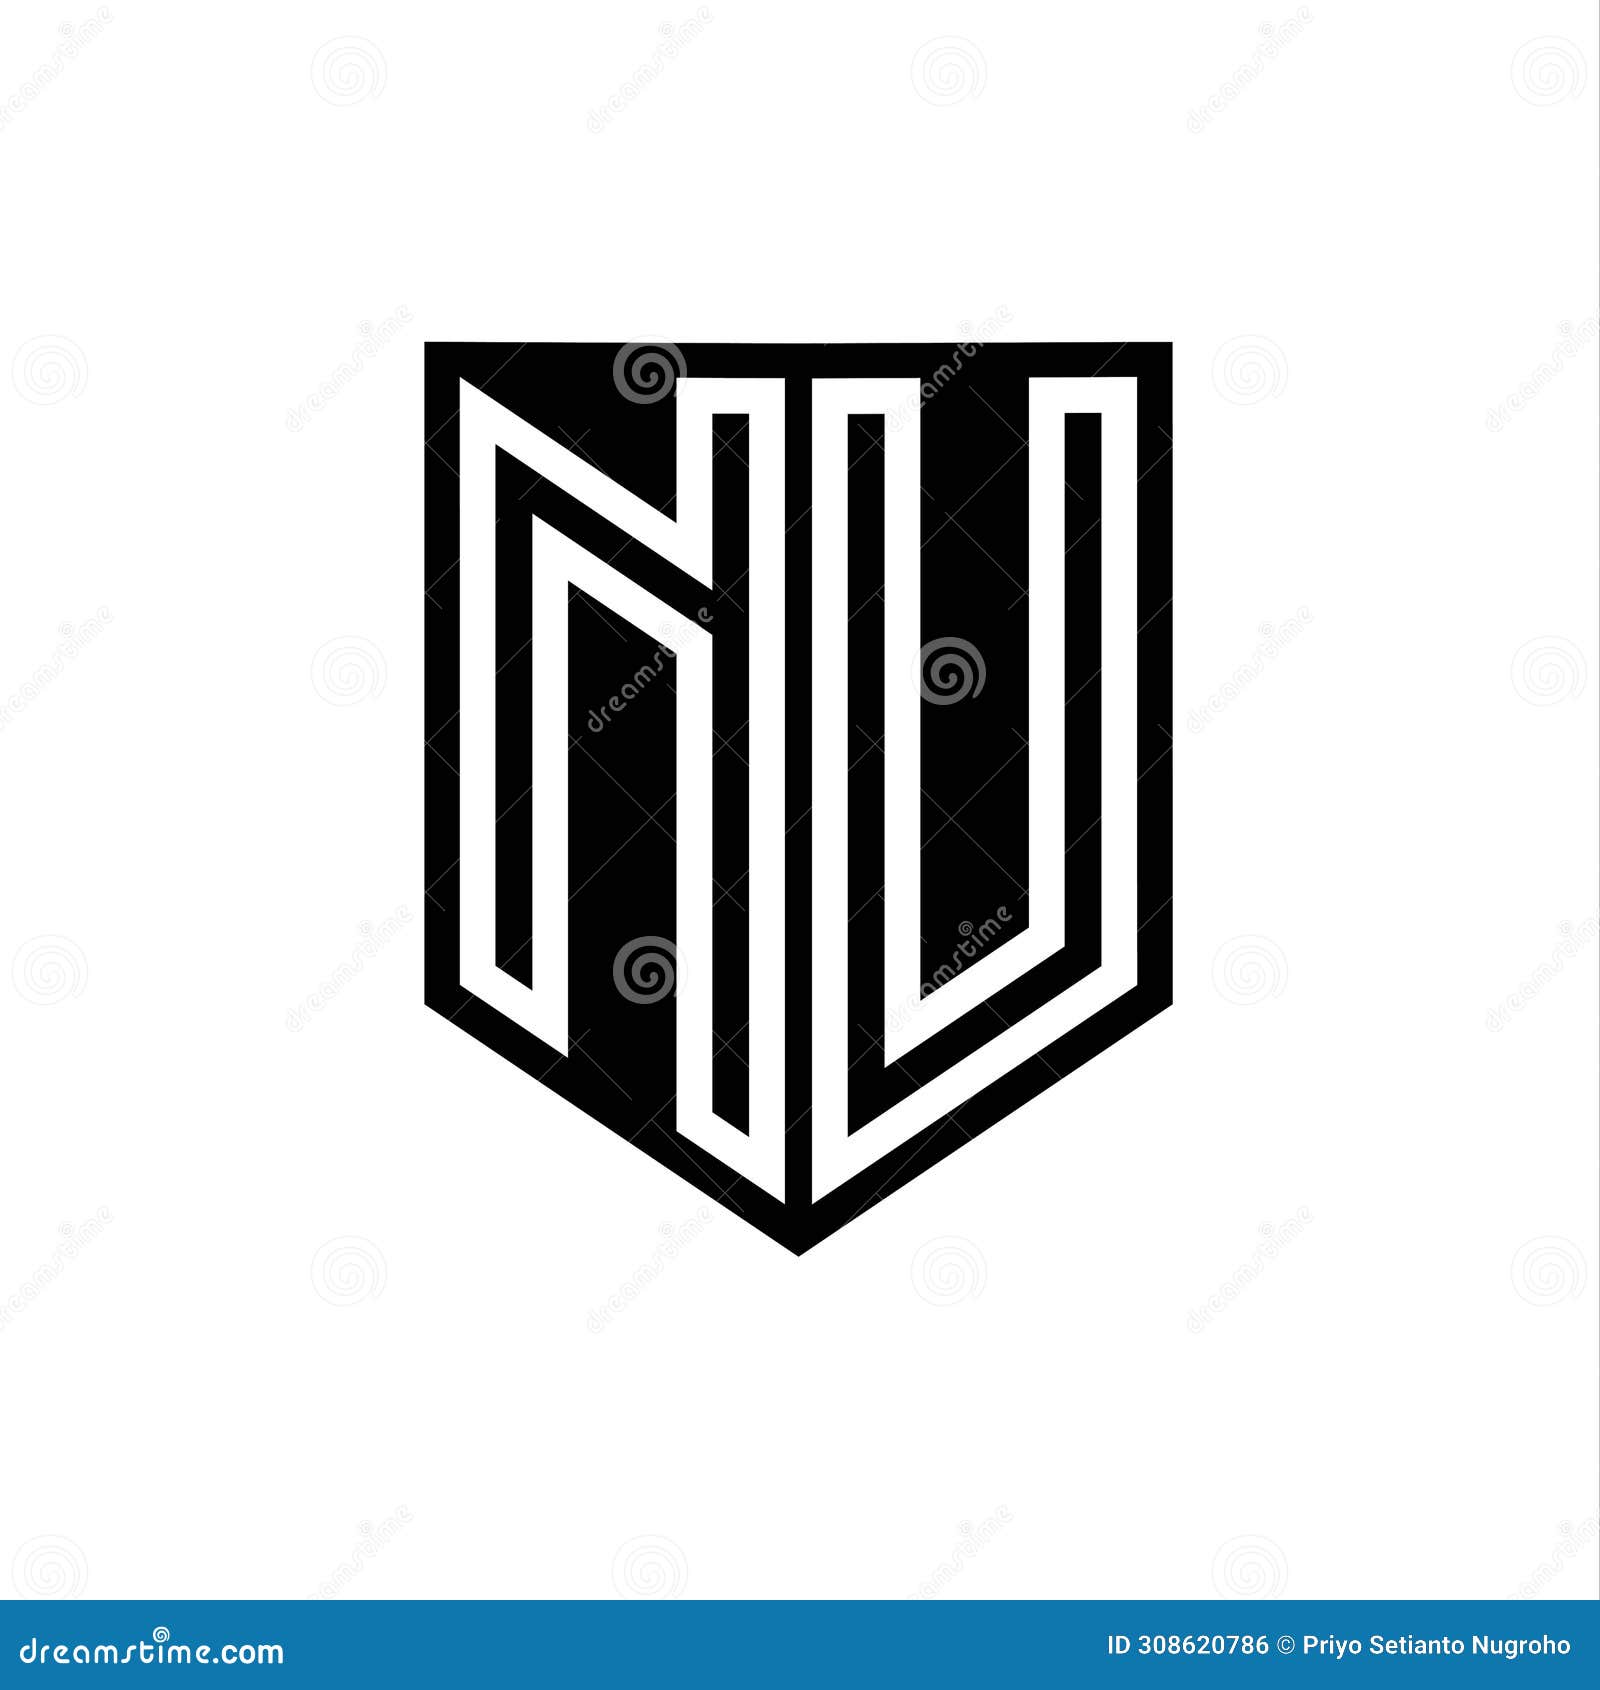 nu logo monogram shield geometric white line inside black shield color 